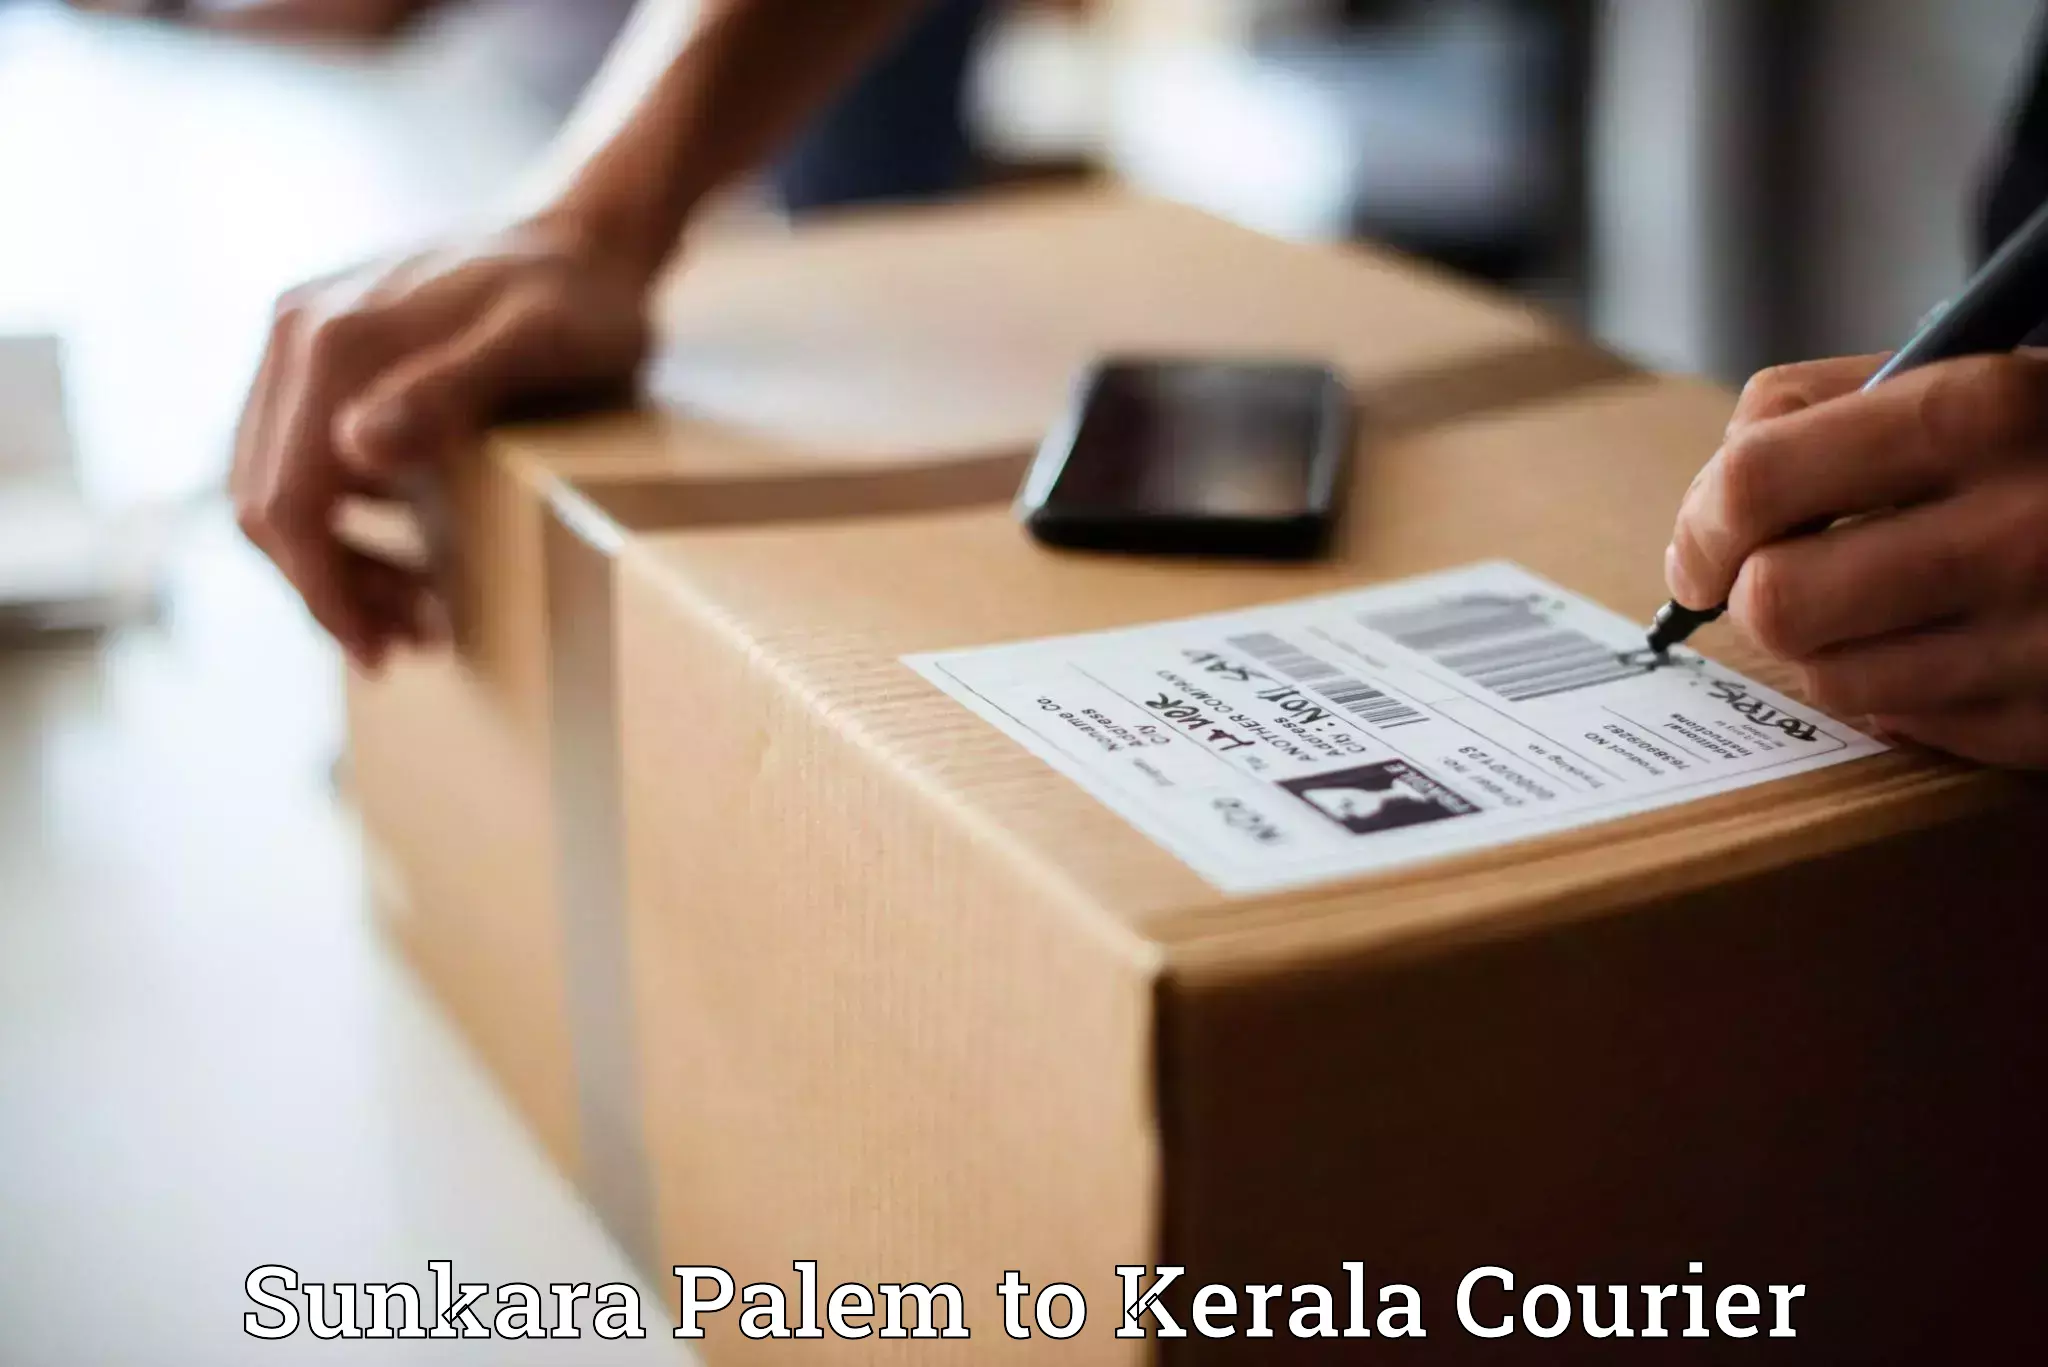 Reliable delivery network Sunkara Palem to Nileshwar